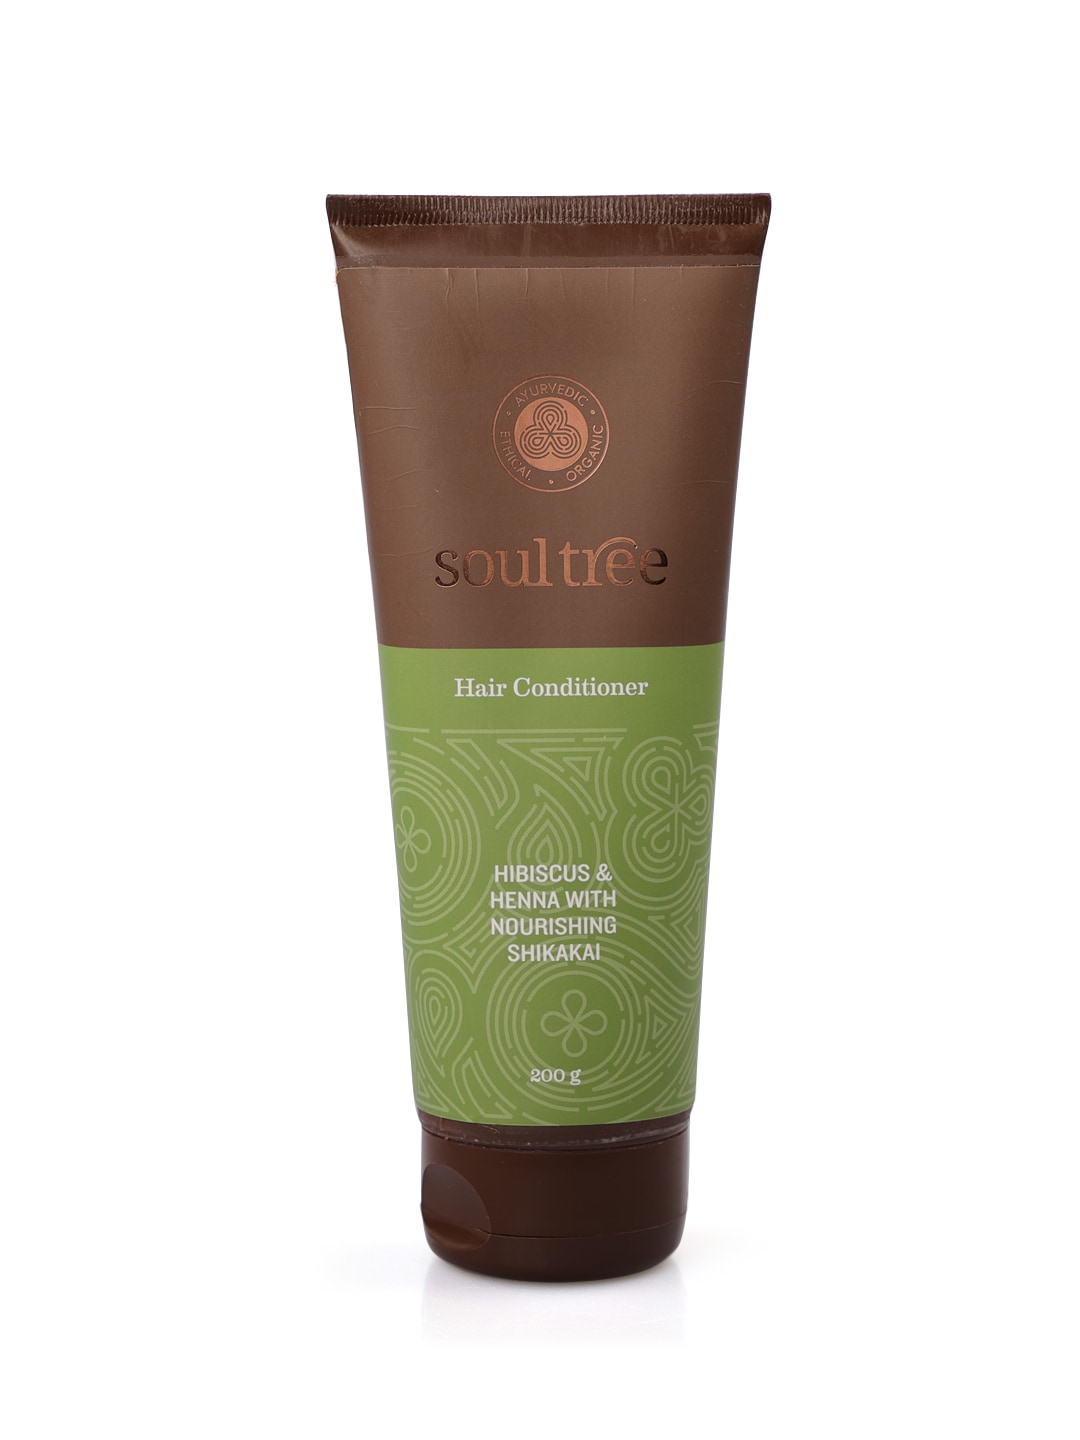 Soultree Hair Conditioner - Hibiscus & Henna with Nourishing Shikakai - 200gm Price in India